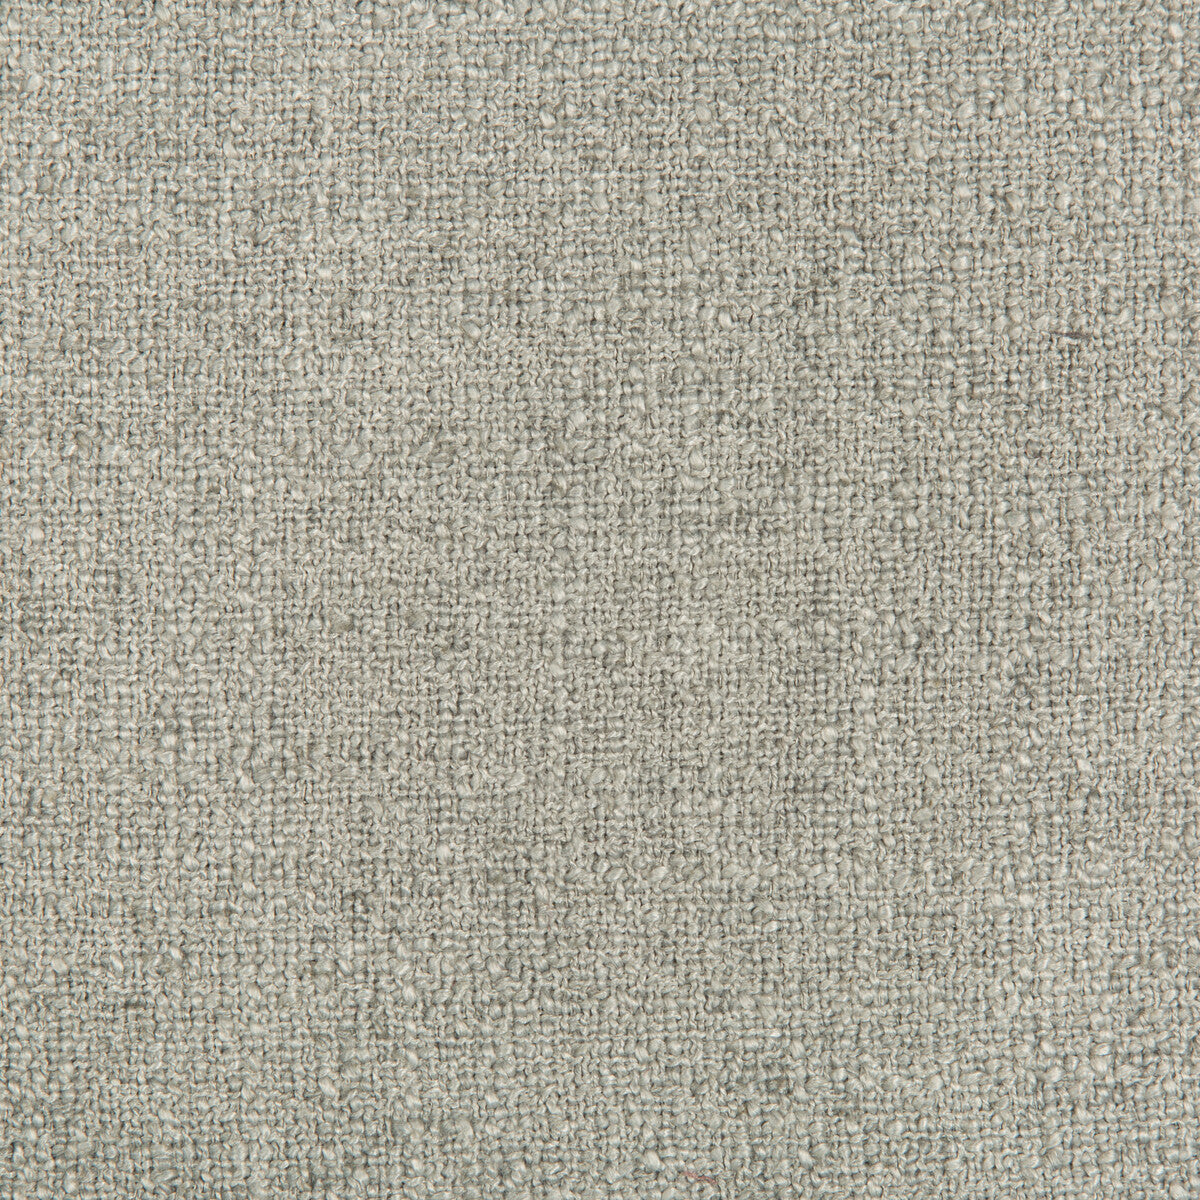 Kravet Smart fabric in 35147-11 color - pattern 35147.11.0 - by Kravet Smart